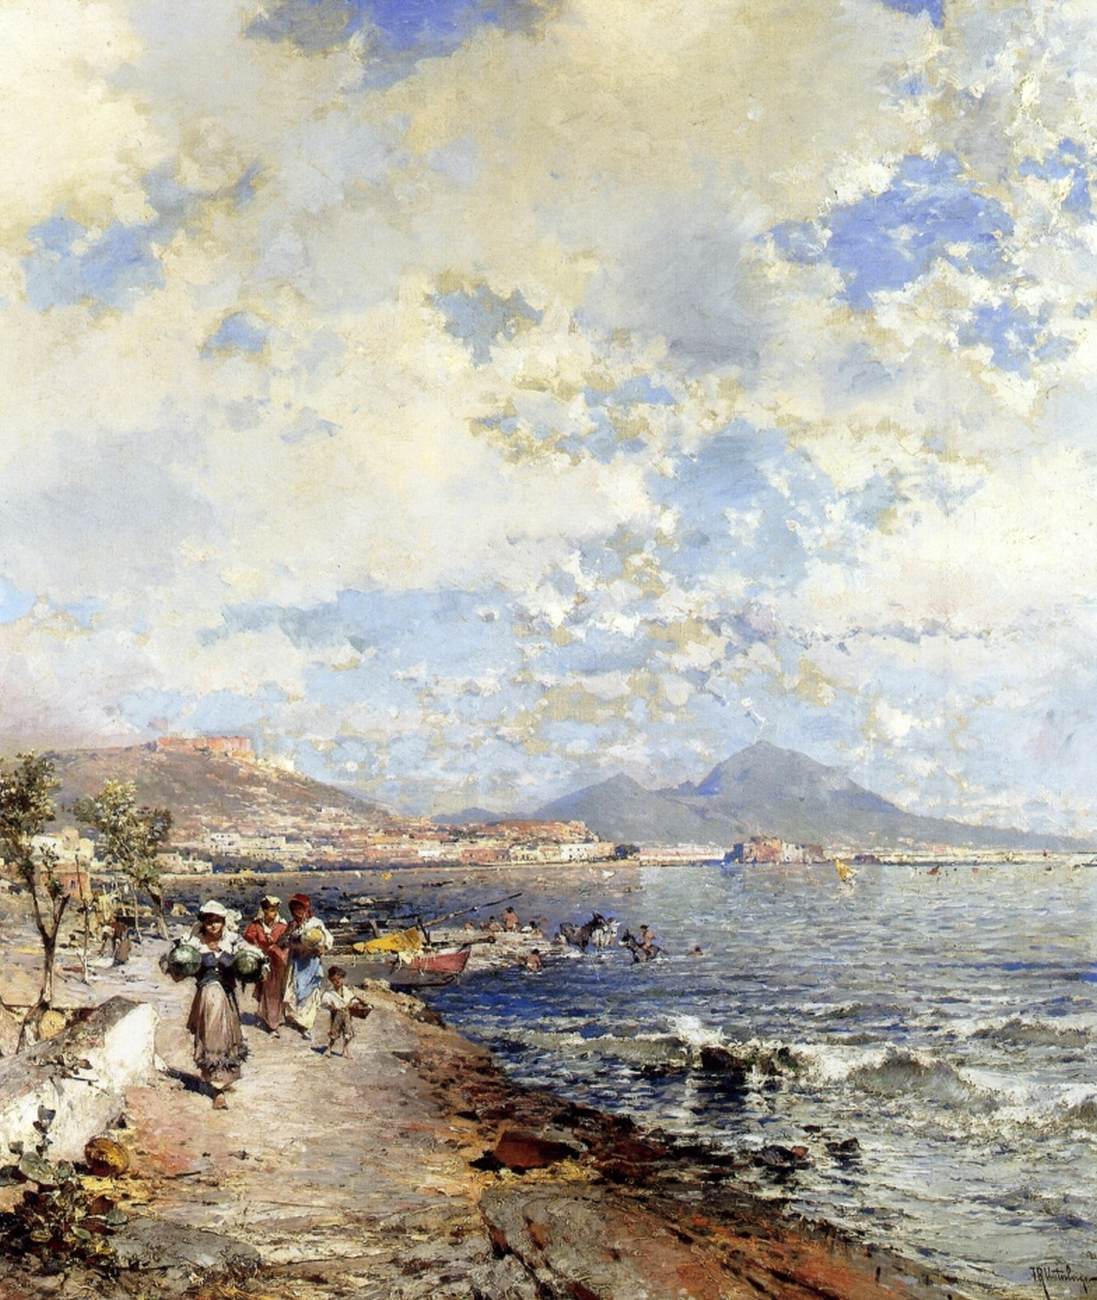 Baie de Naples